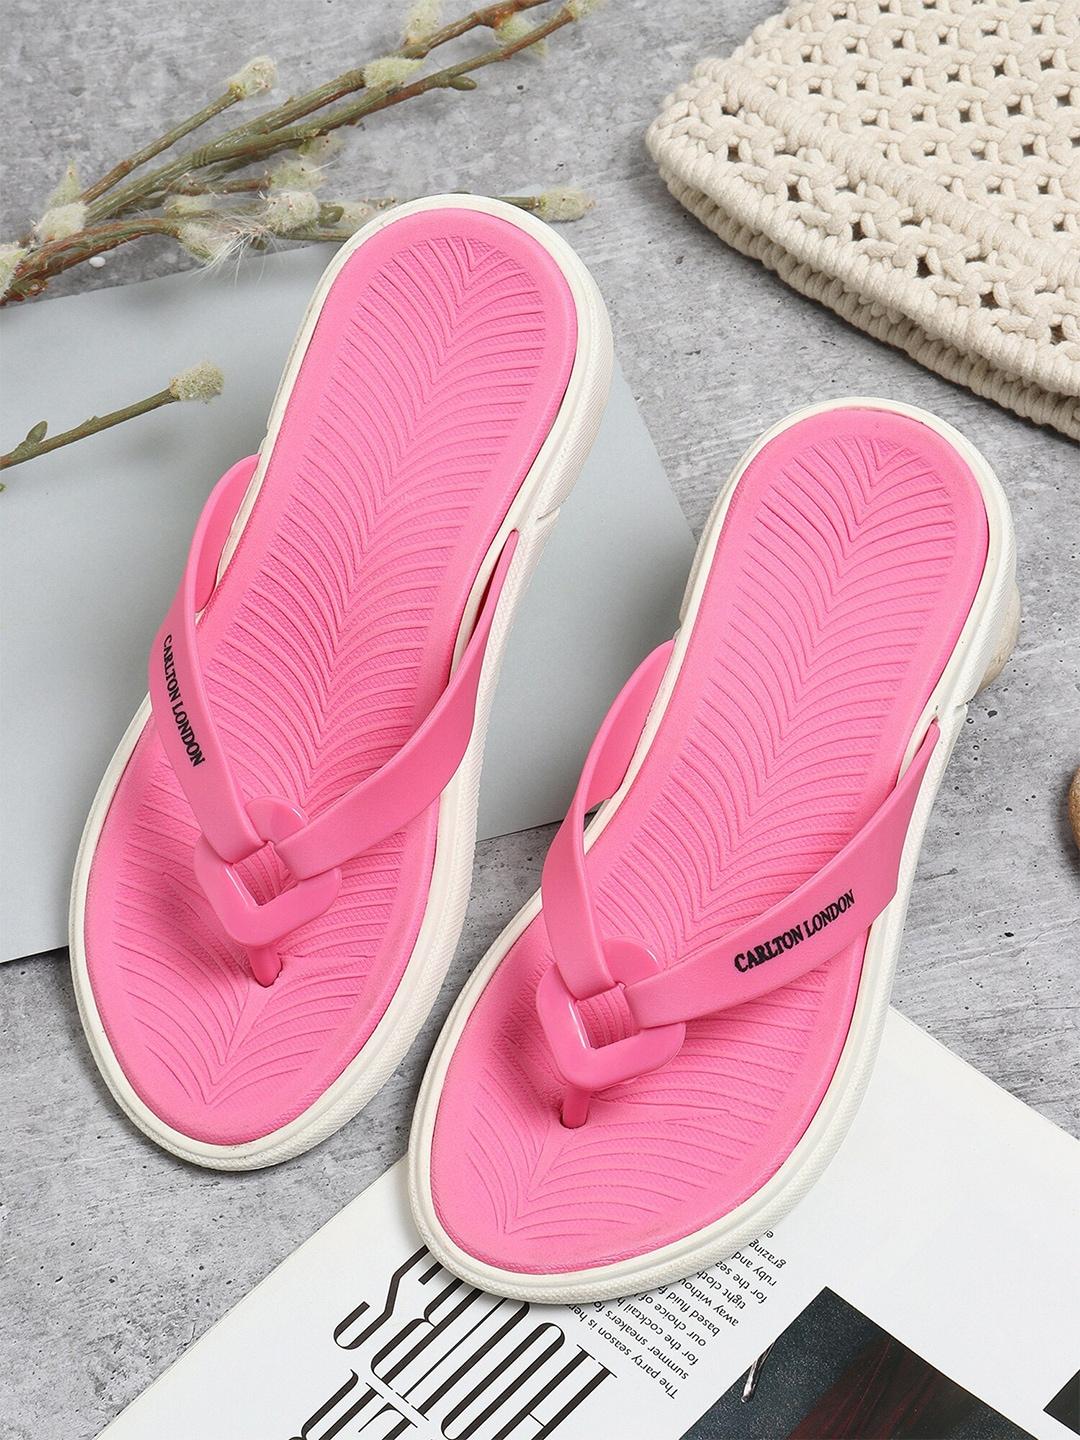 carlton london women pink & white rubber thong flip-flops